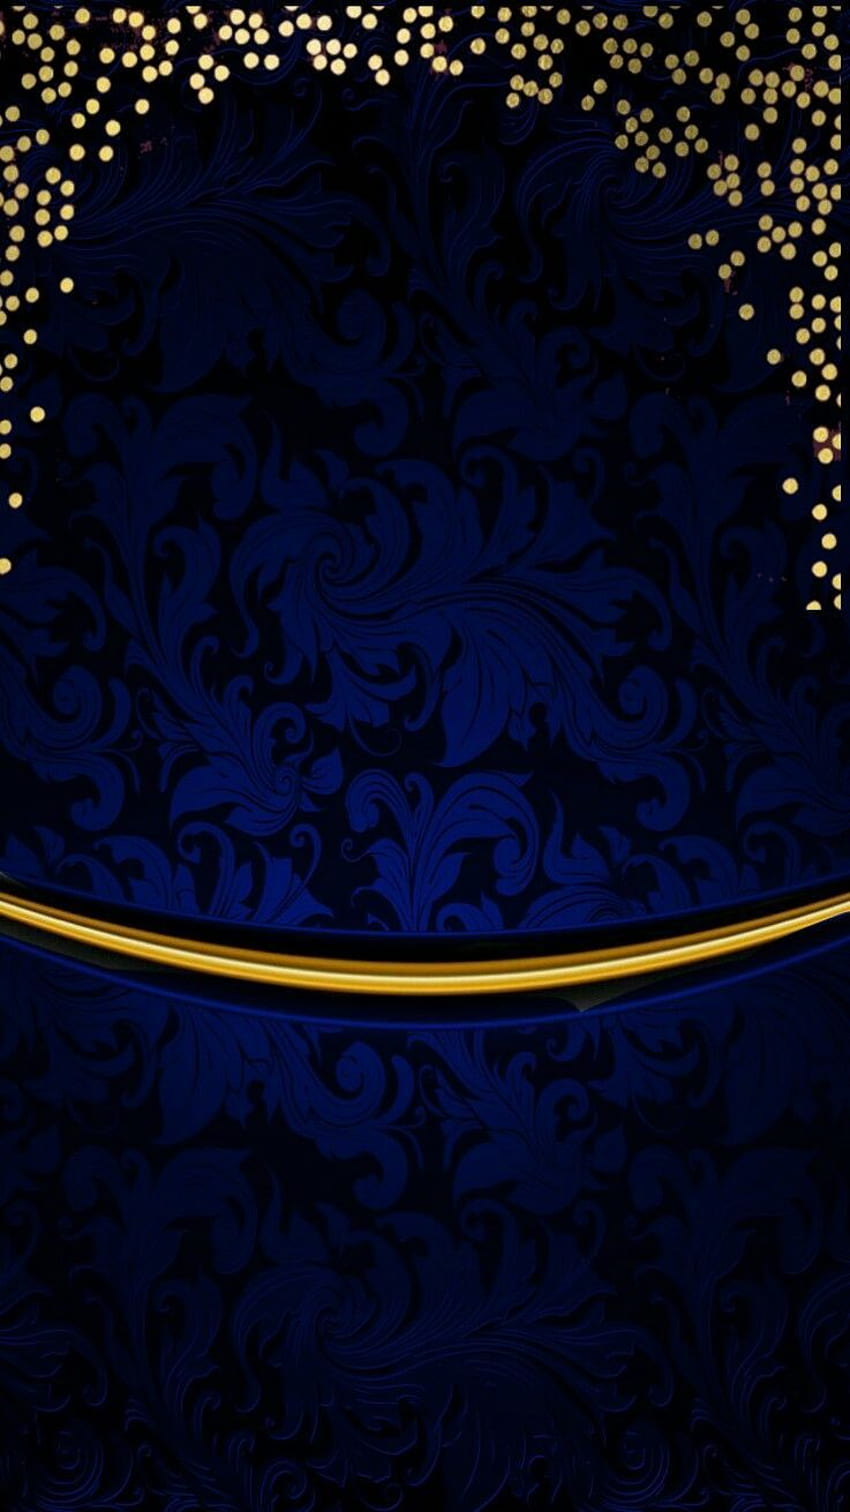 Royal Blue and Gold - Royal Blue i Gold tło na nietoperzu, Royal Gold Tapeta na telefon HD